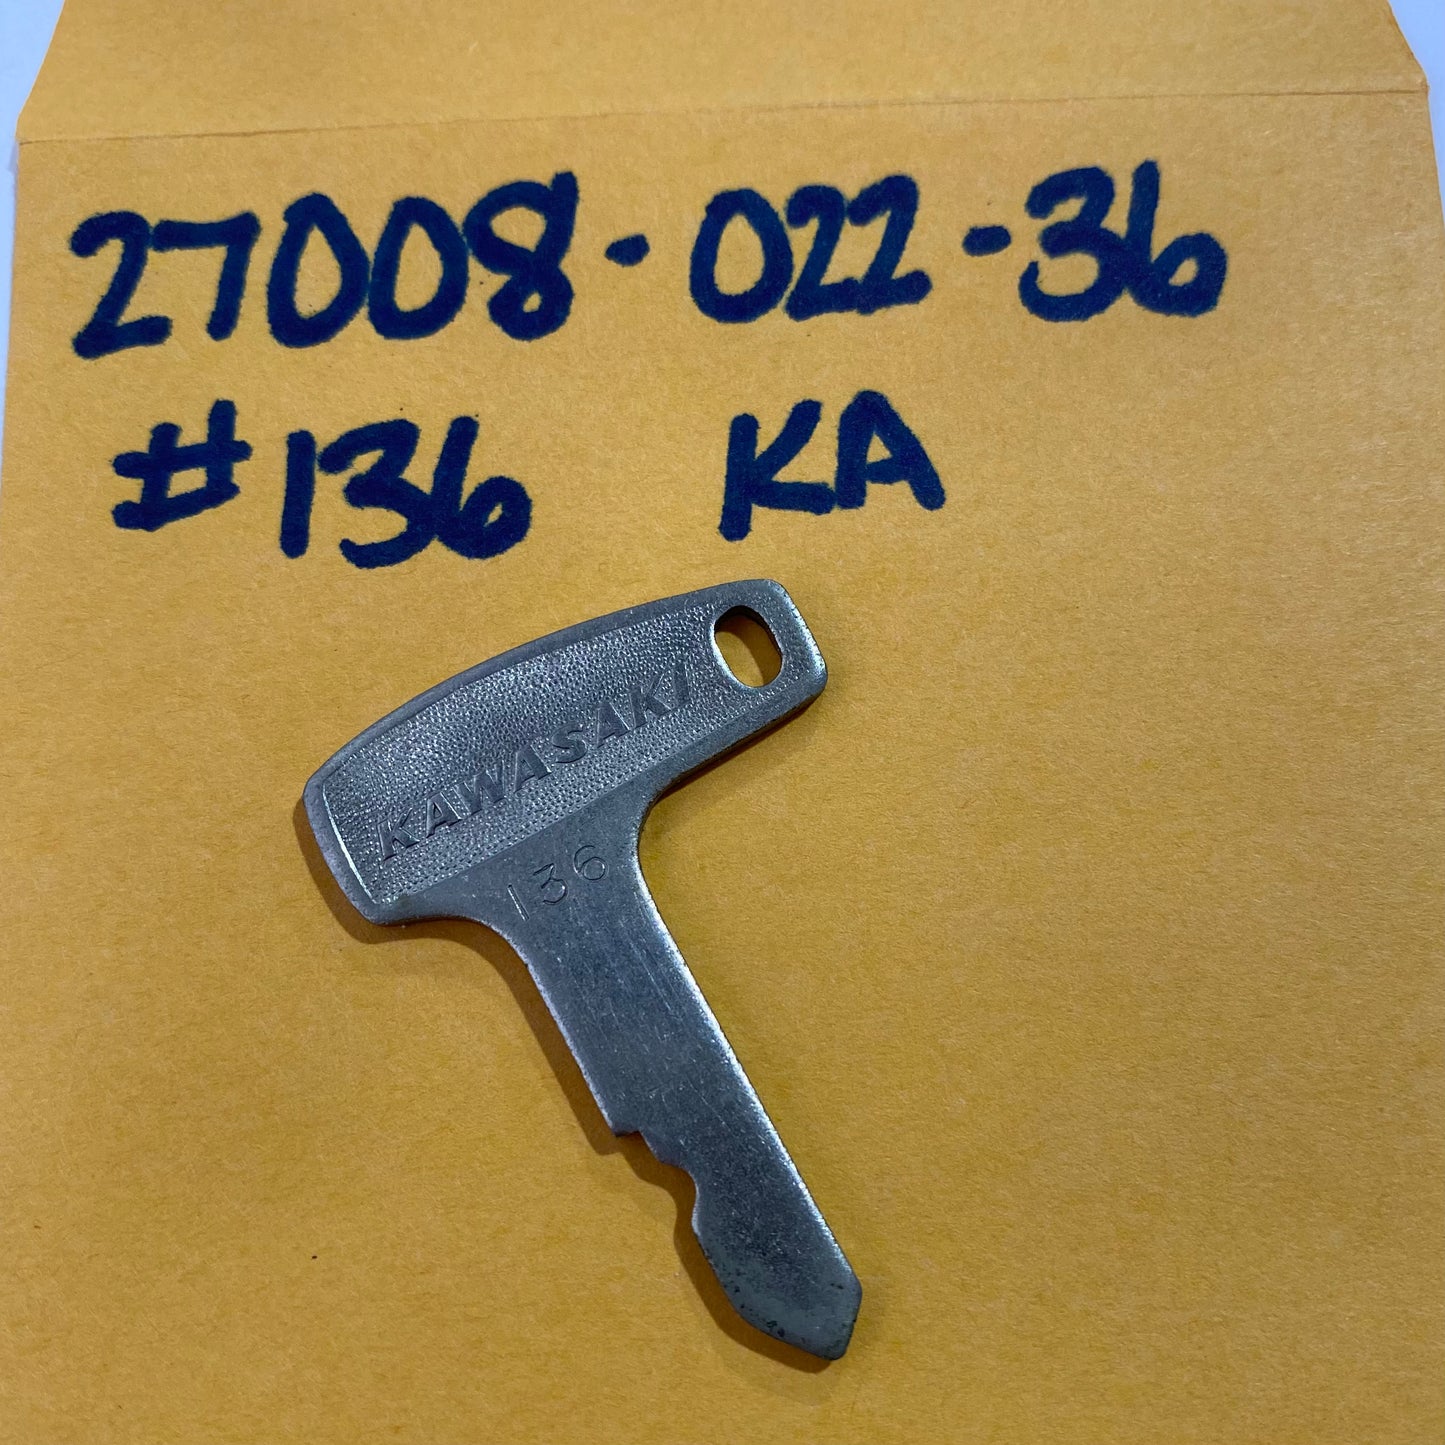 Kawasaki Key Set #136 27008-022-36